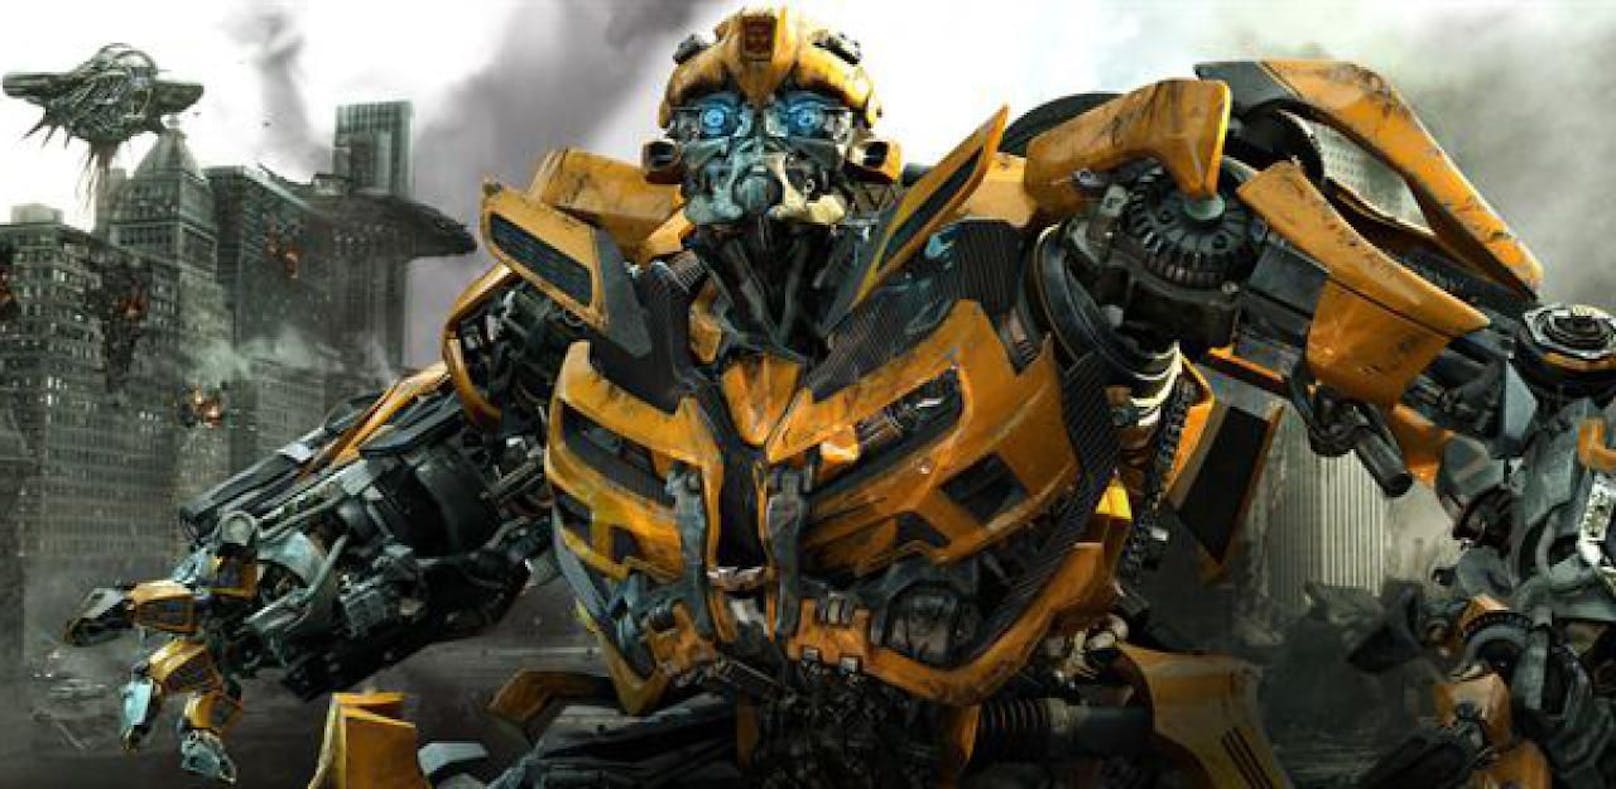 Bumblebee in &quot;Transformers 3&quot;